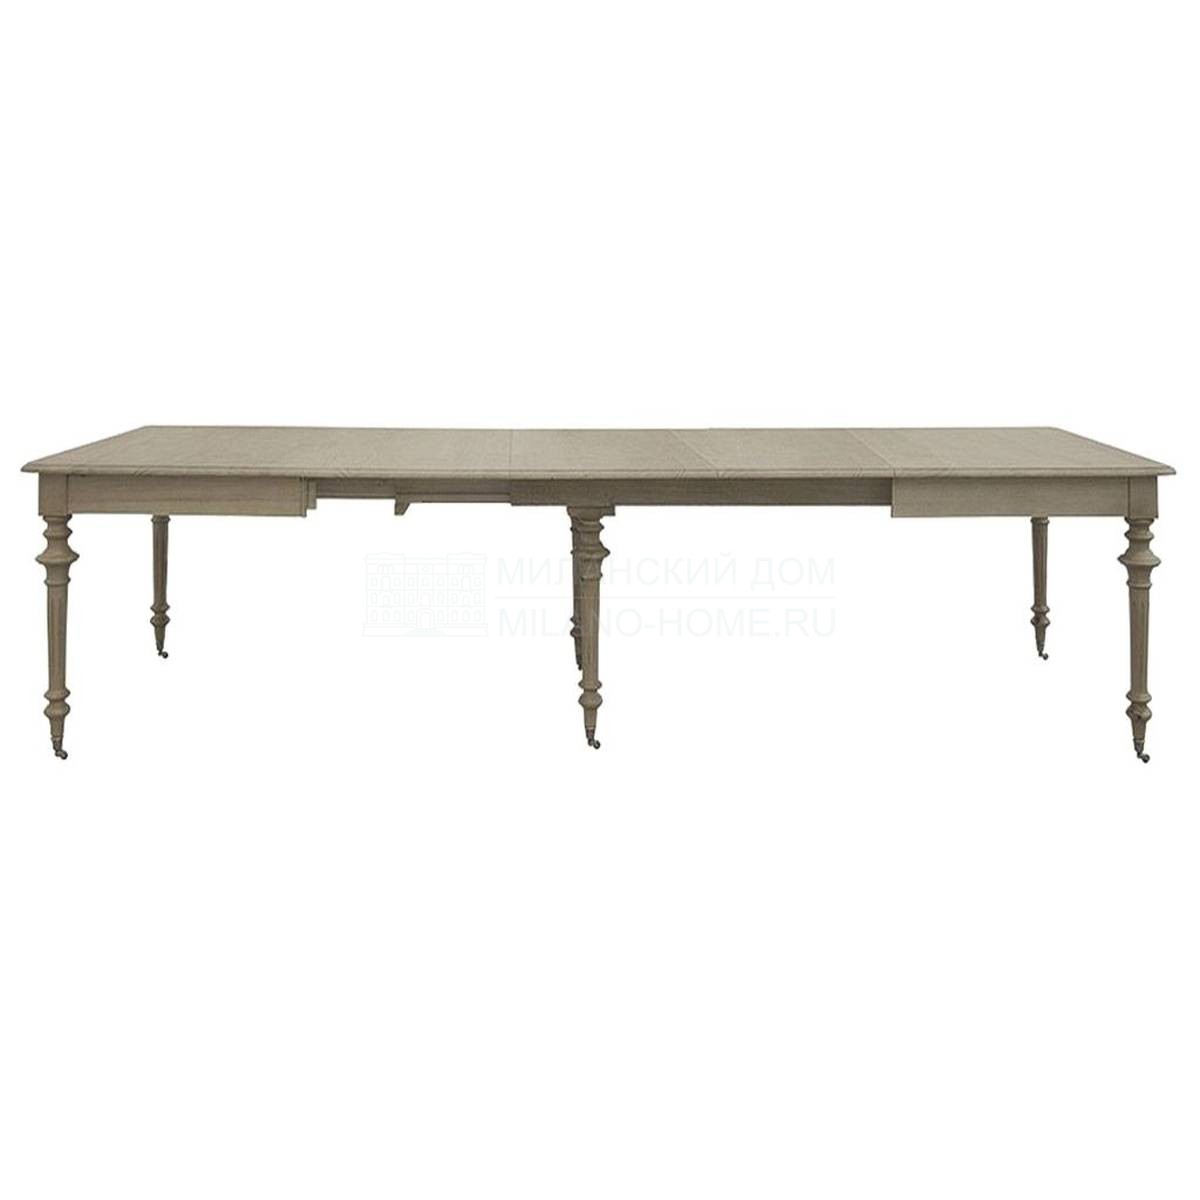 Обеденный стол M-10520 dining table из Испании фабрики GUADARTE